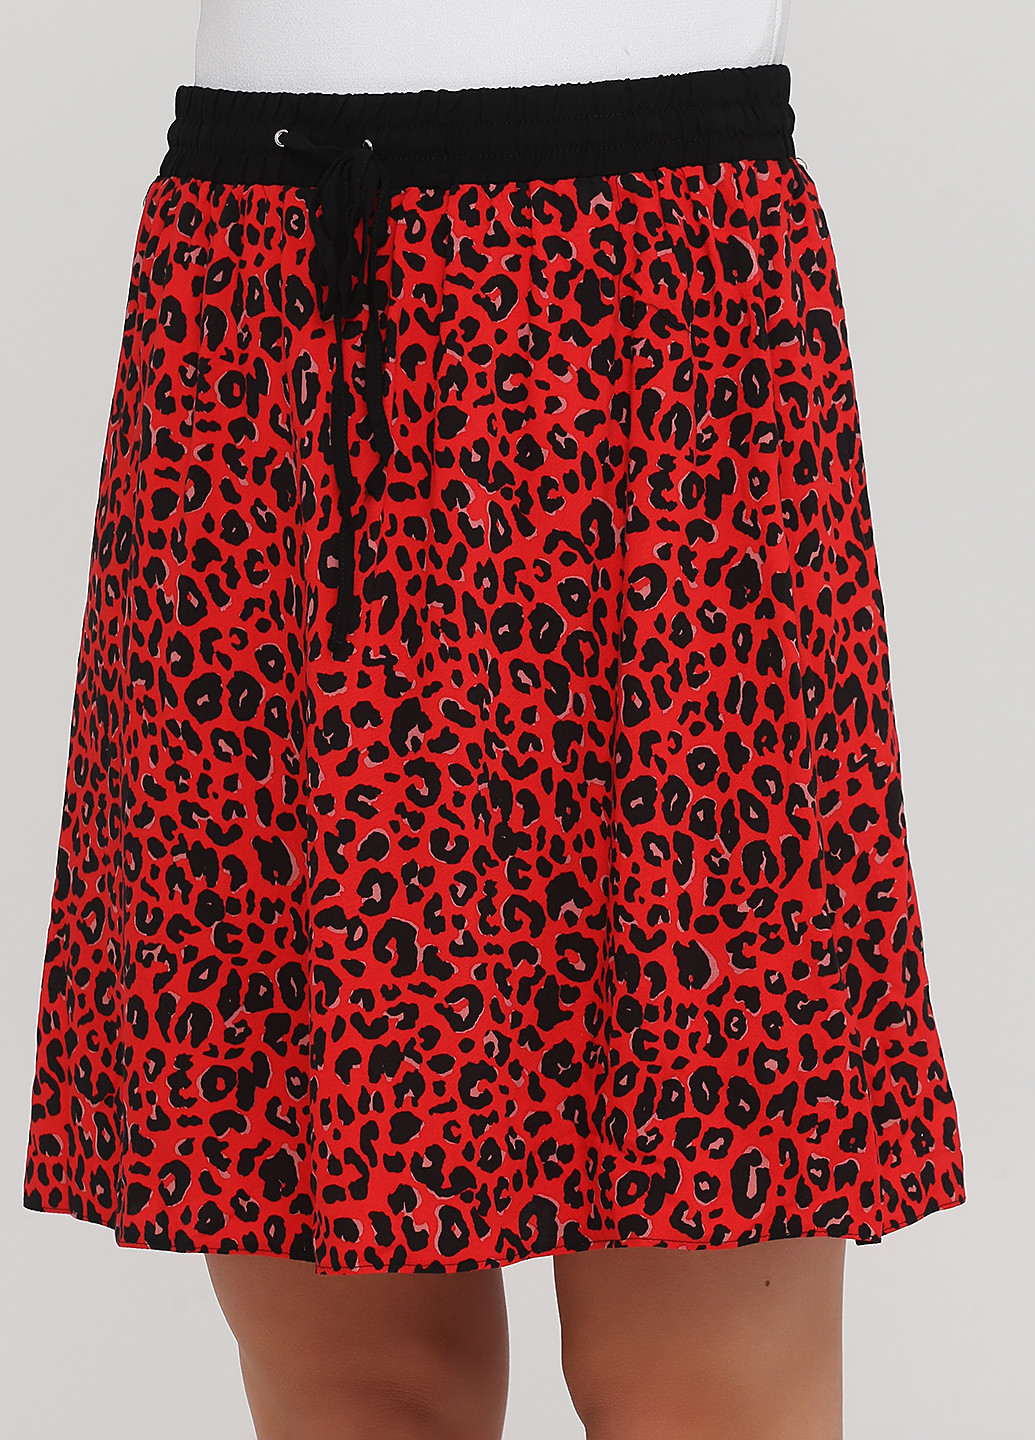 Красная кэжуал леопардовая юбка C&A а-силуэта (трапеция)